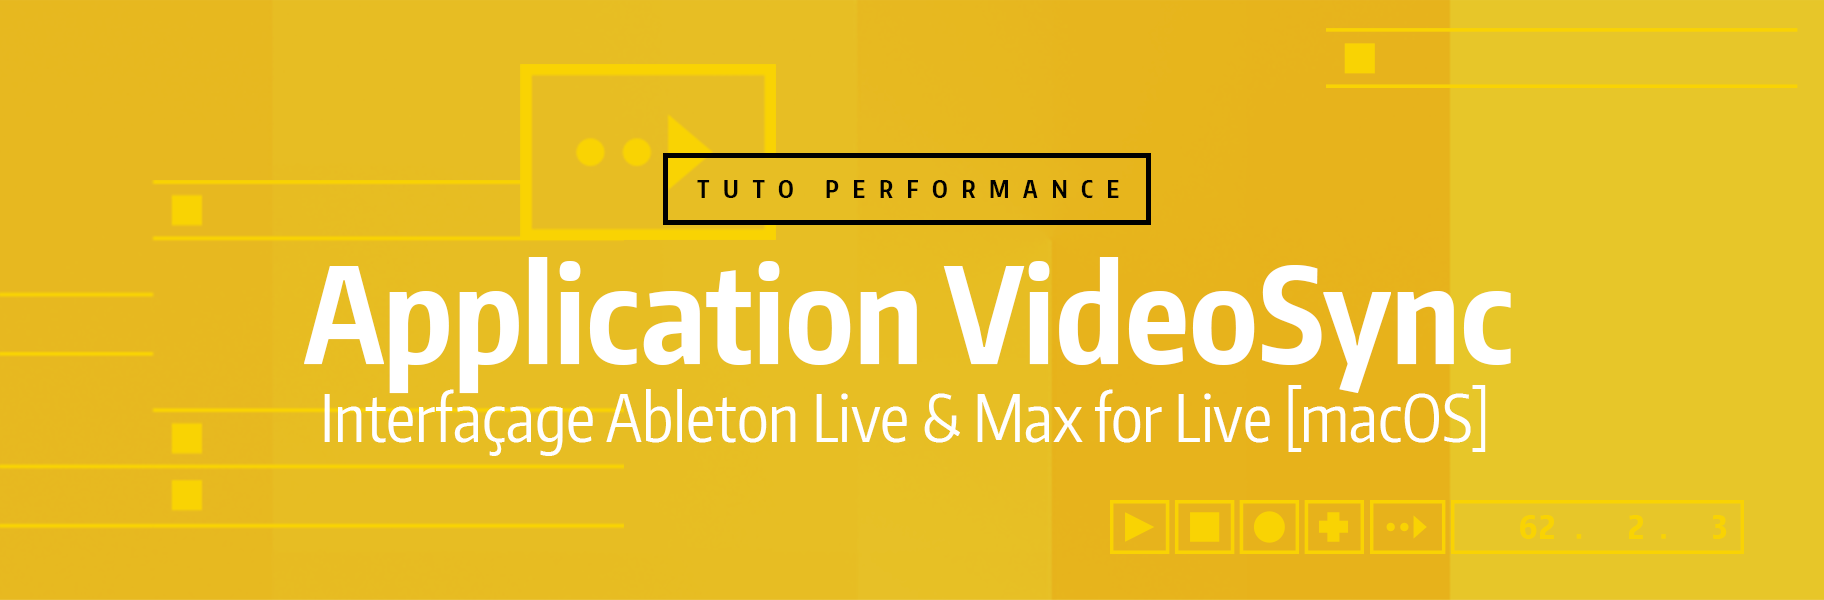 Tutoriel Ableton Live - Application VideoSync